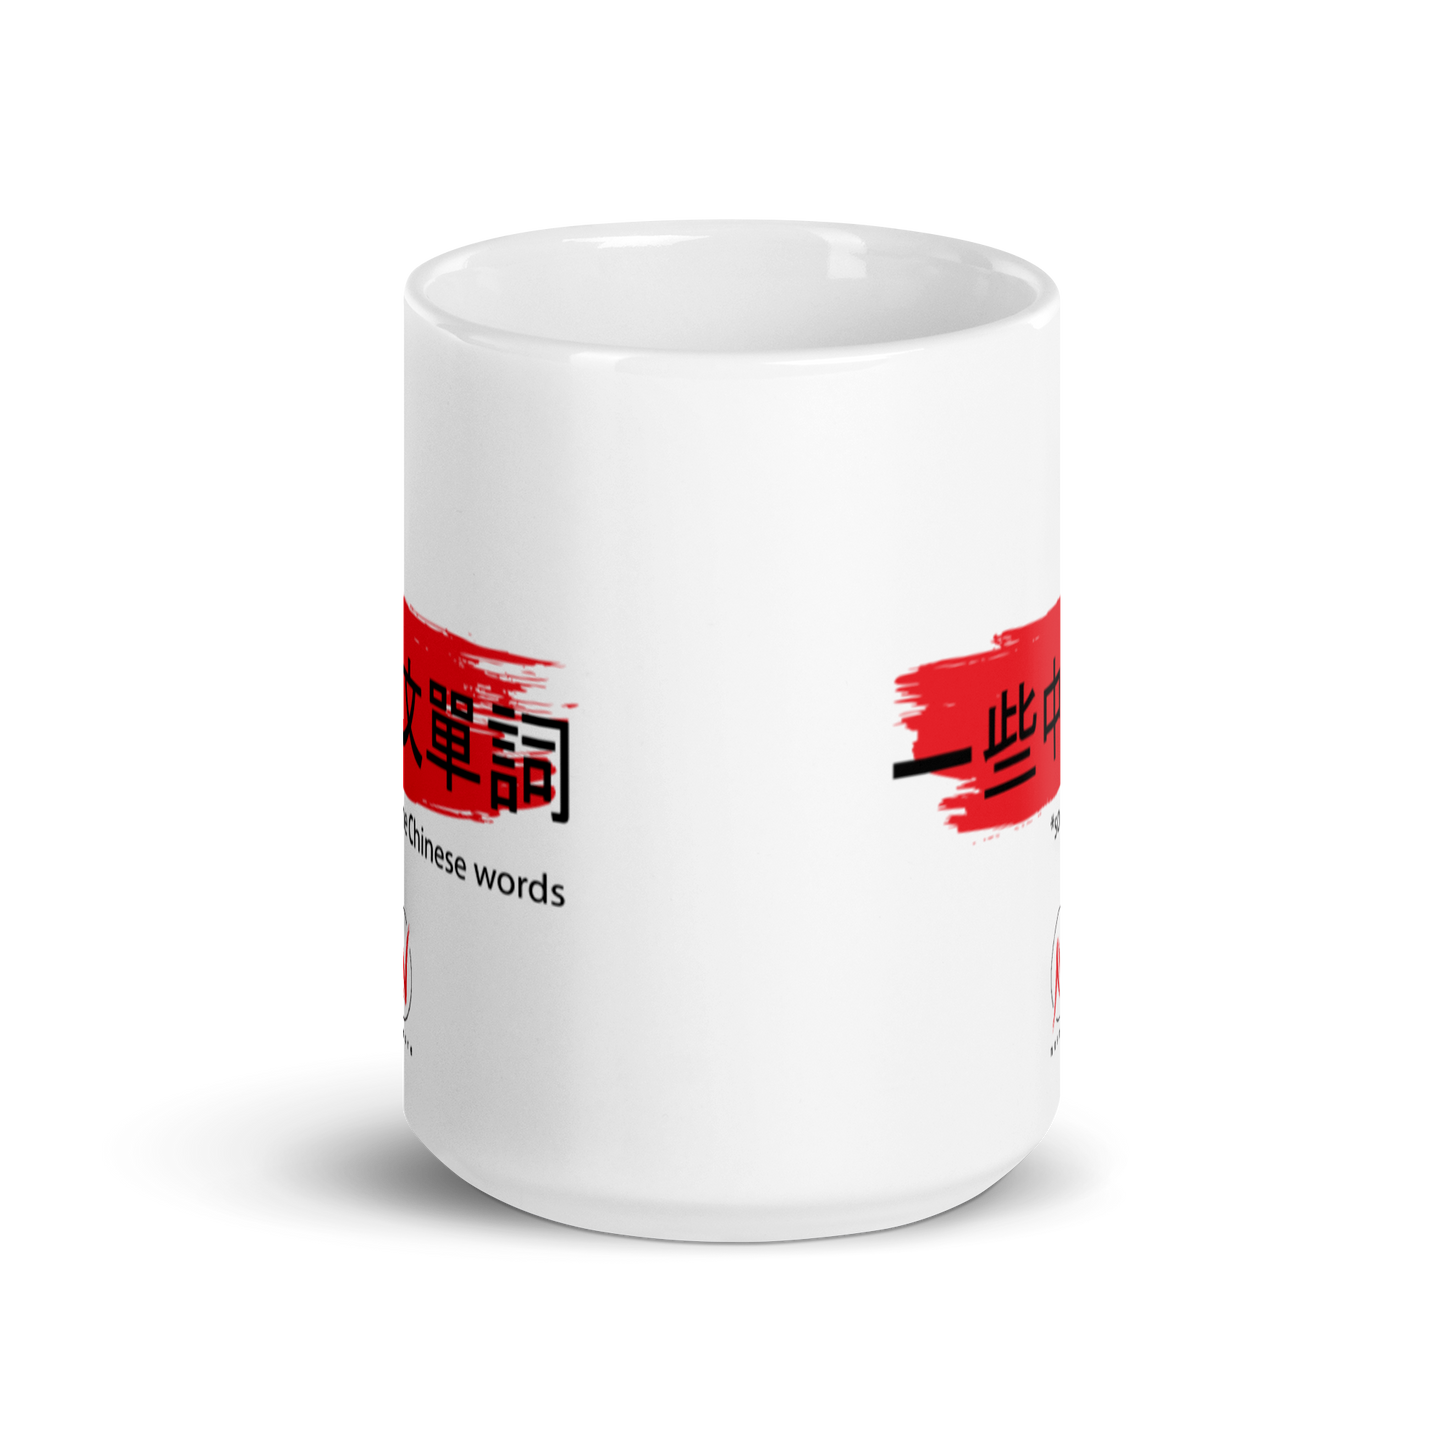 "Something in Chinese" White glossy mug